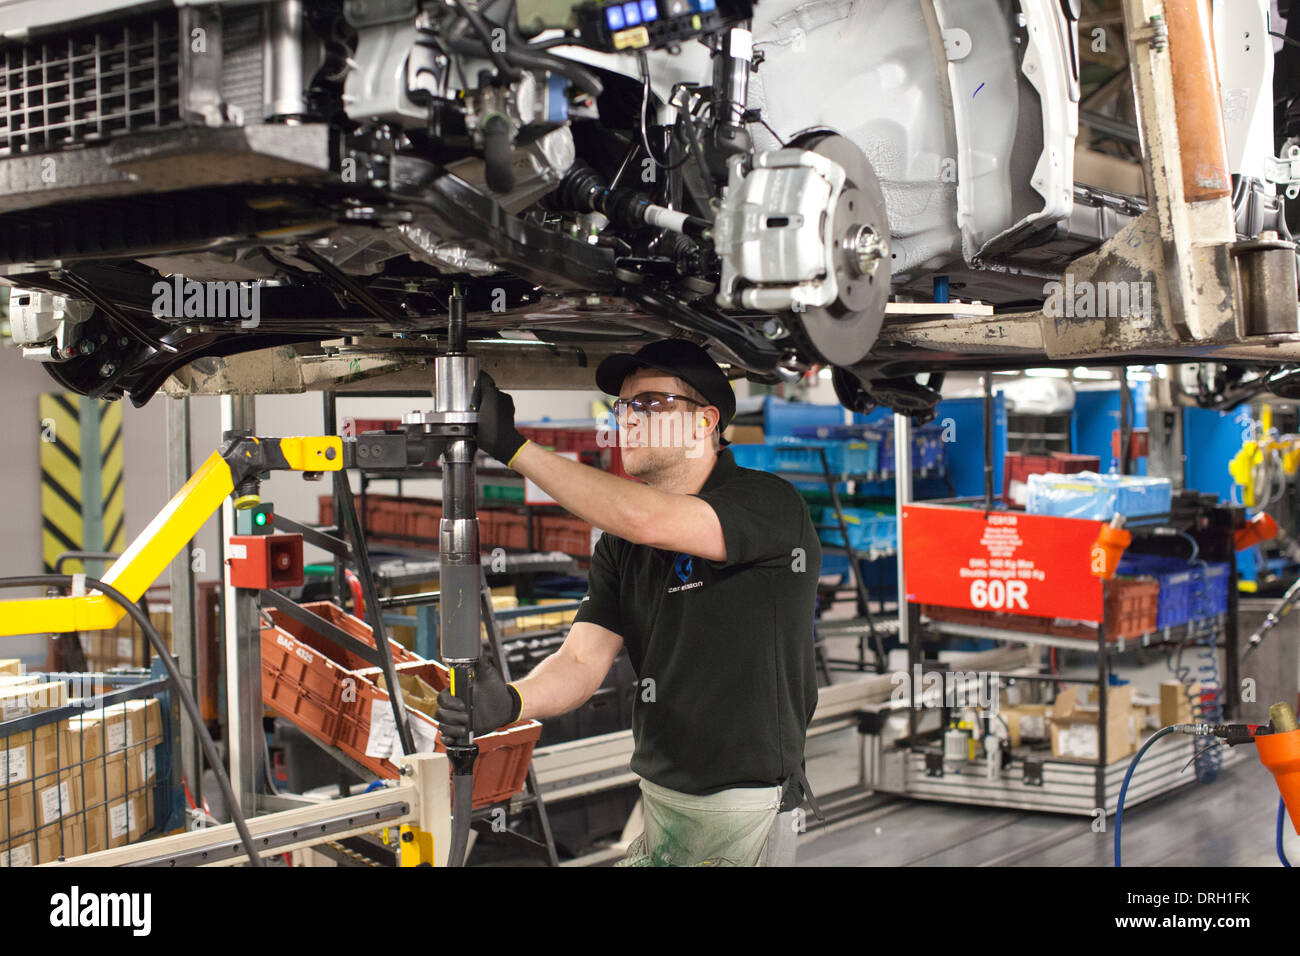 Production of Nissan domestic-car manufacturer, Sunderland plant, North England, UK Stock Photo